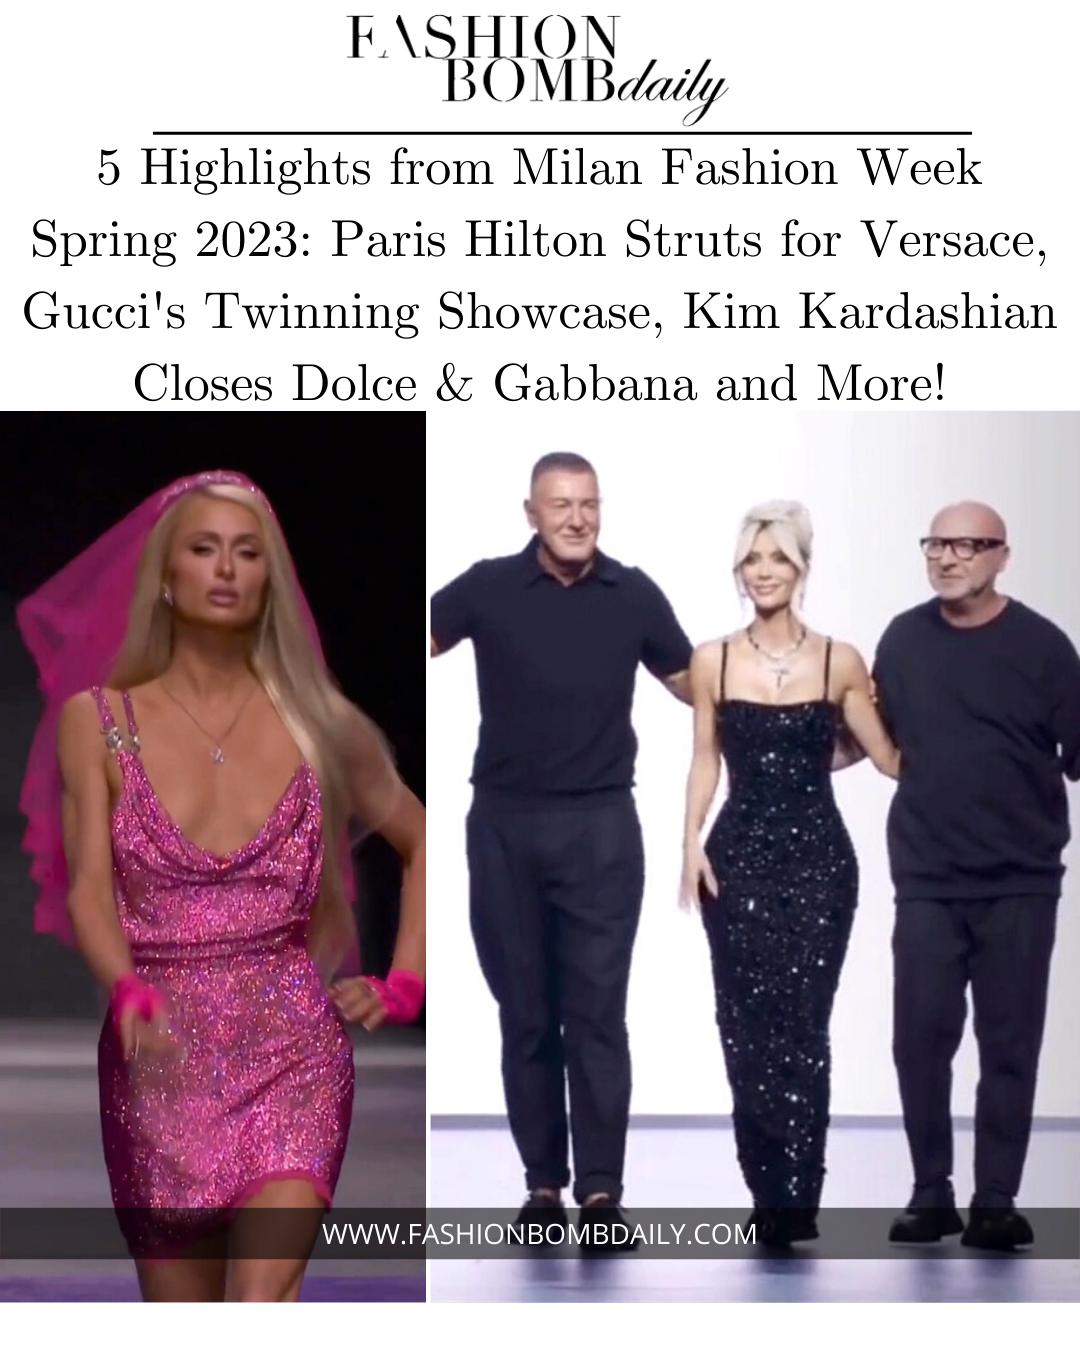 A Complete Timeline Of Paris Hilton And Kim Kardashian's